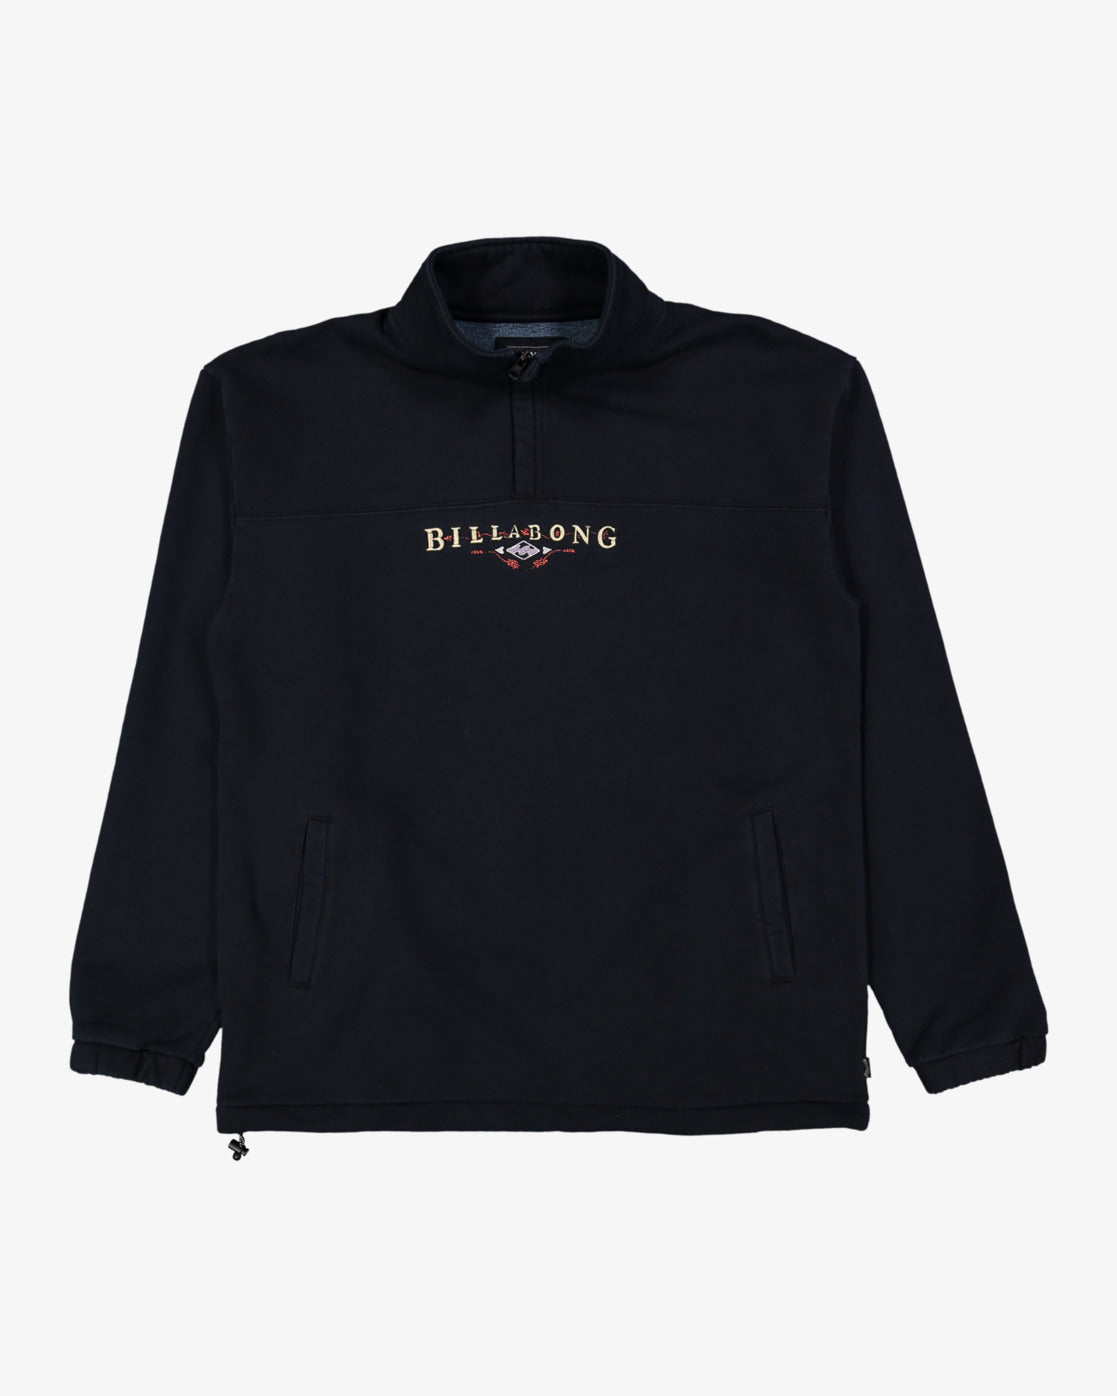 Billabong King Prawn Pullover Fleece Black Colourway Front Logo